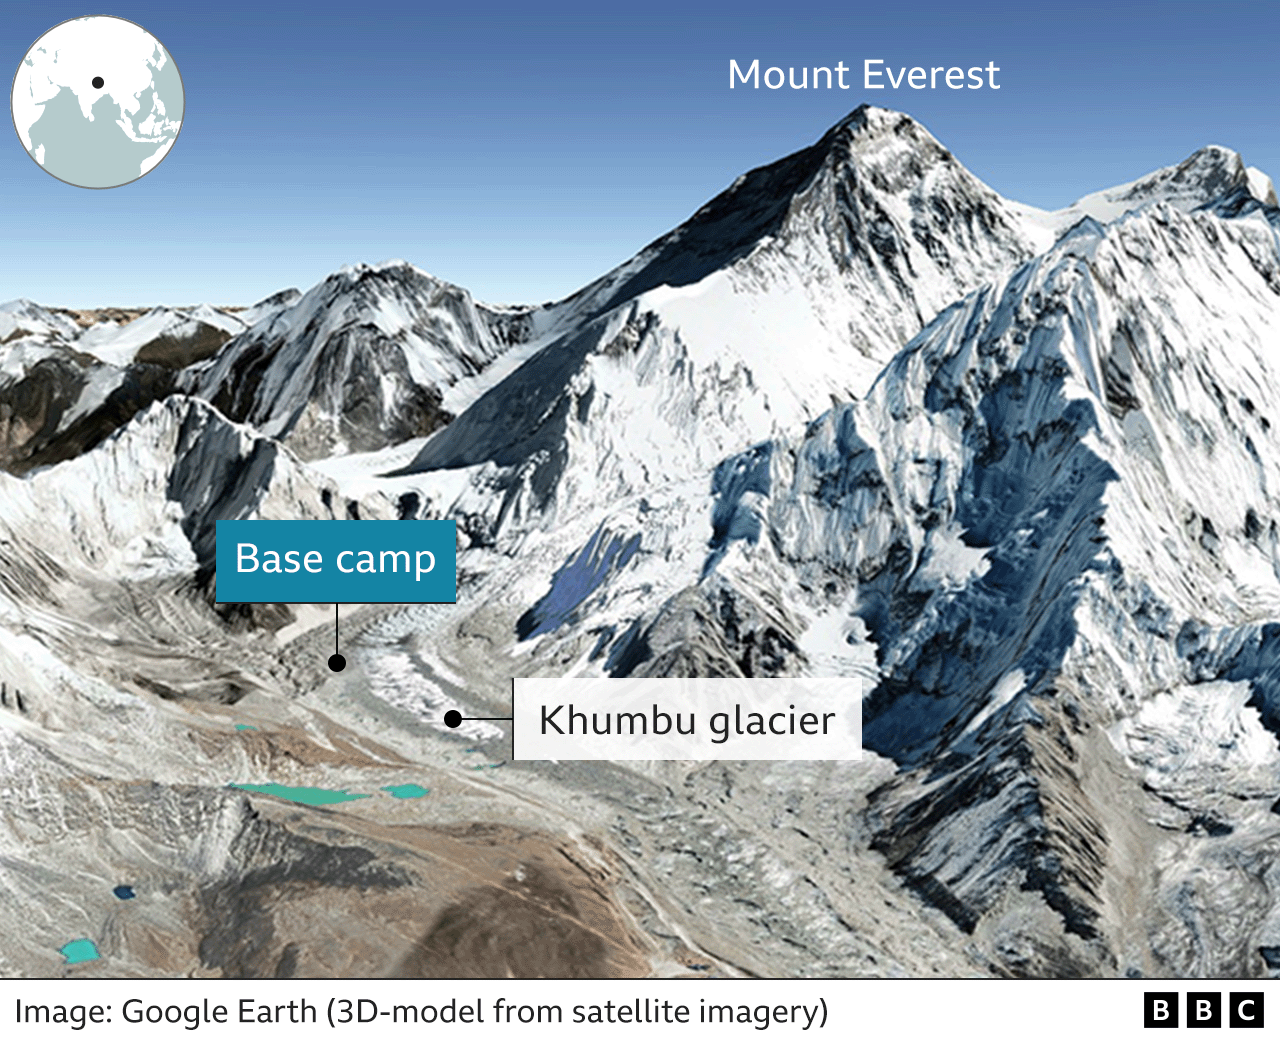 Google Earth image of Everest base camp and the Khubu glacier